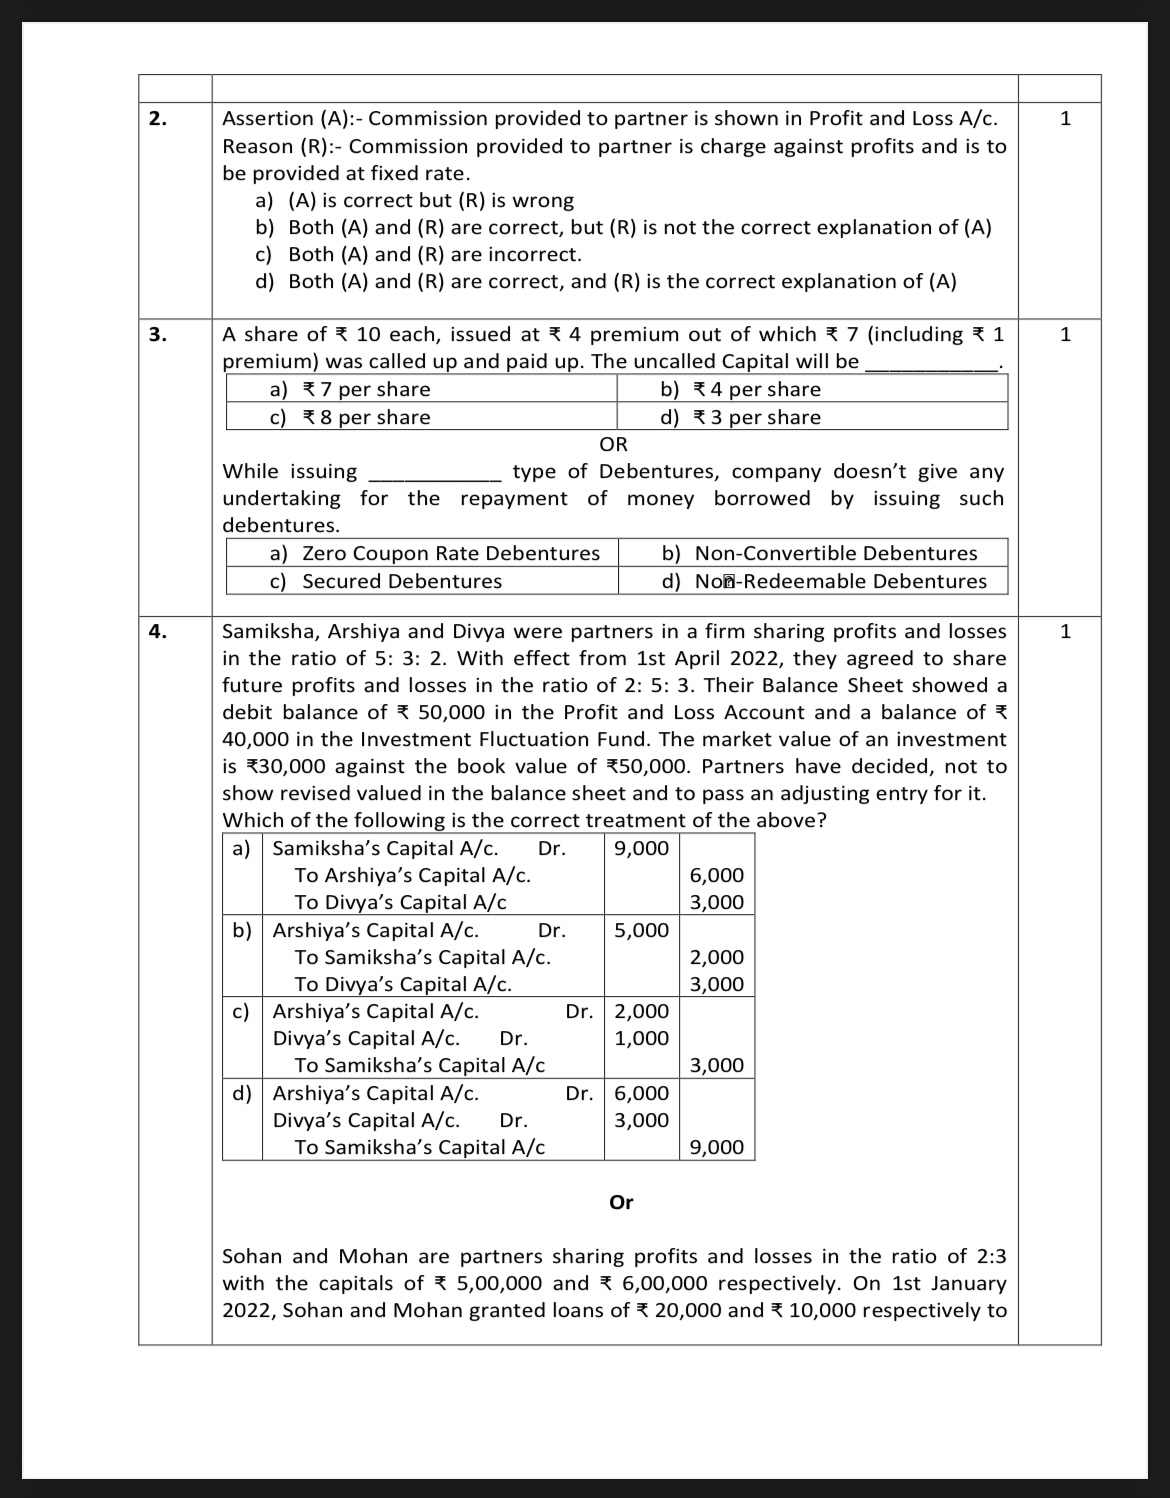 Sample question paper of accountancy-E8244E1D-2BAA-4BBB-A40D-F163539B72B2.jpeg